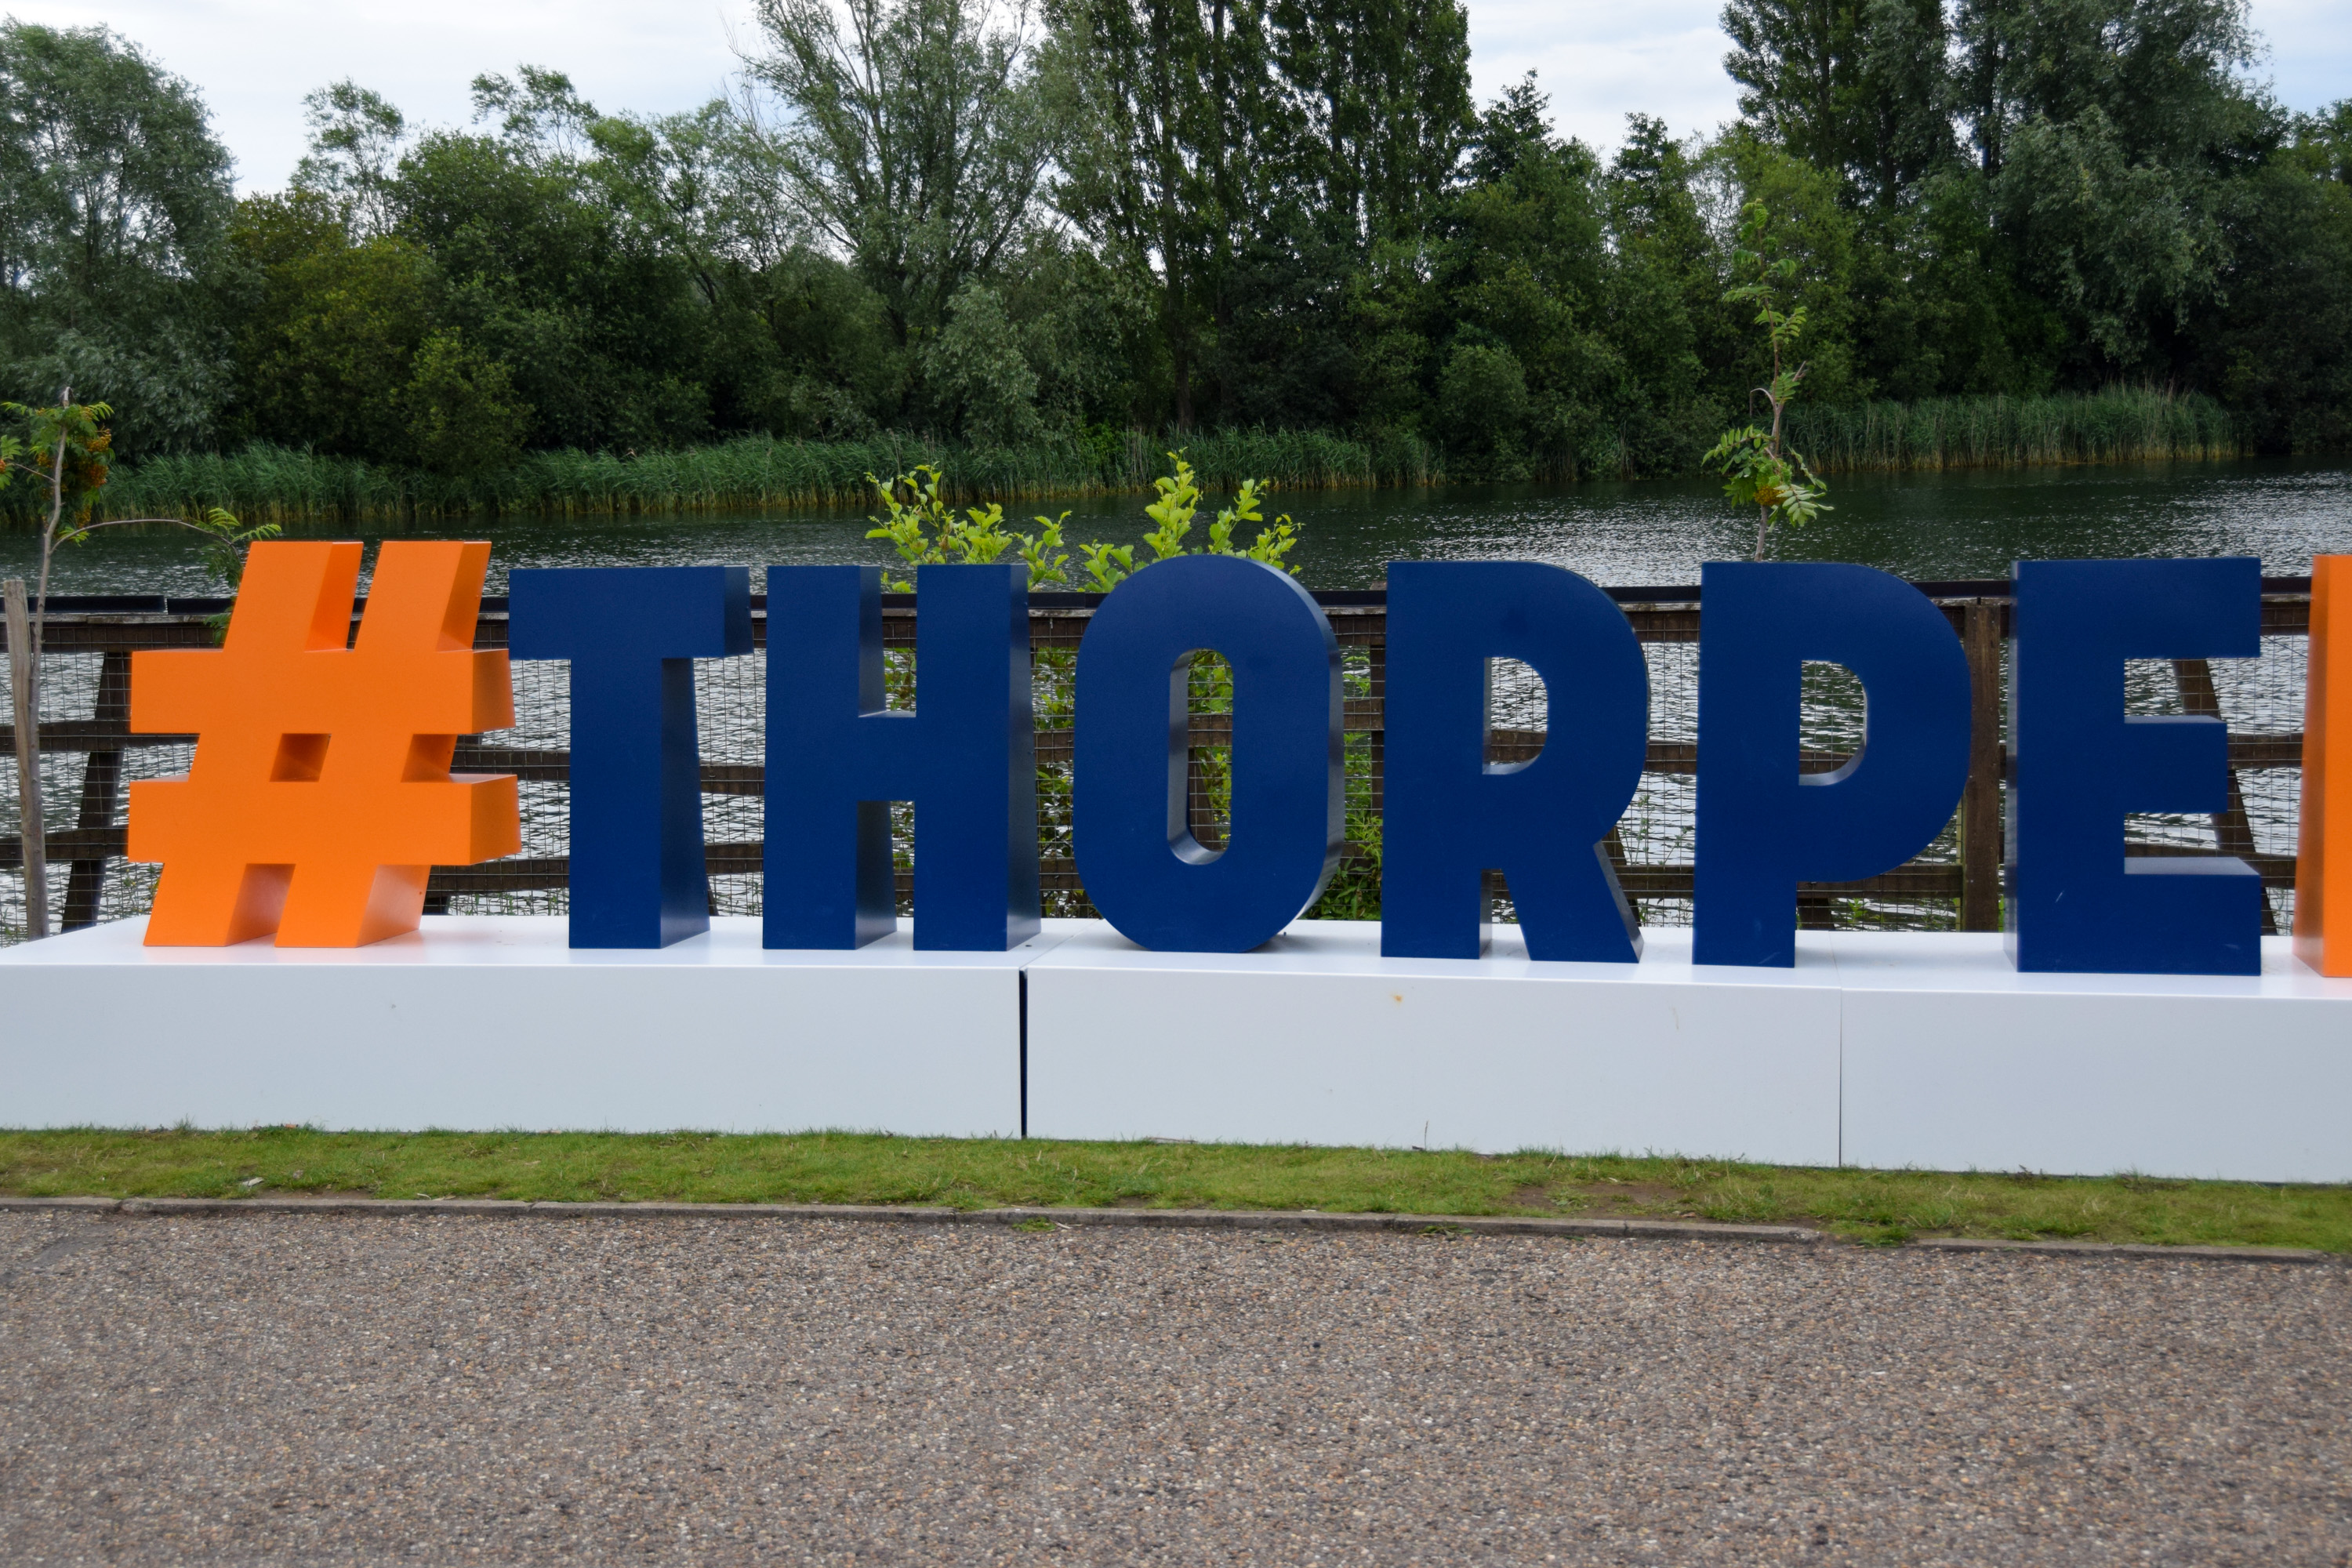 Hashtag Thorpe Park Sign Installed